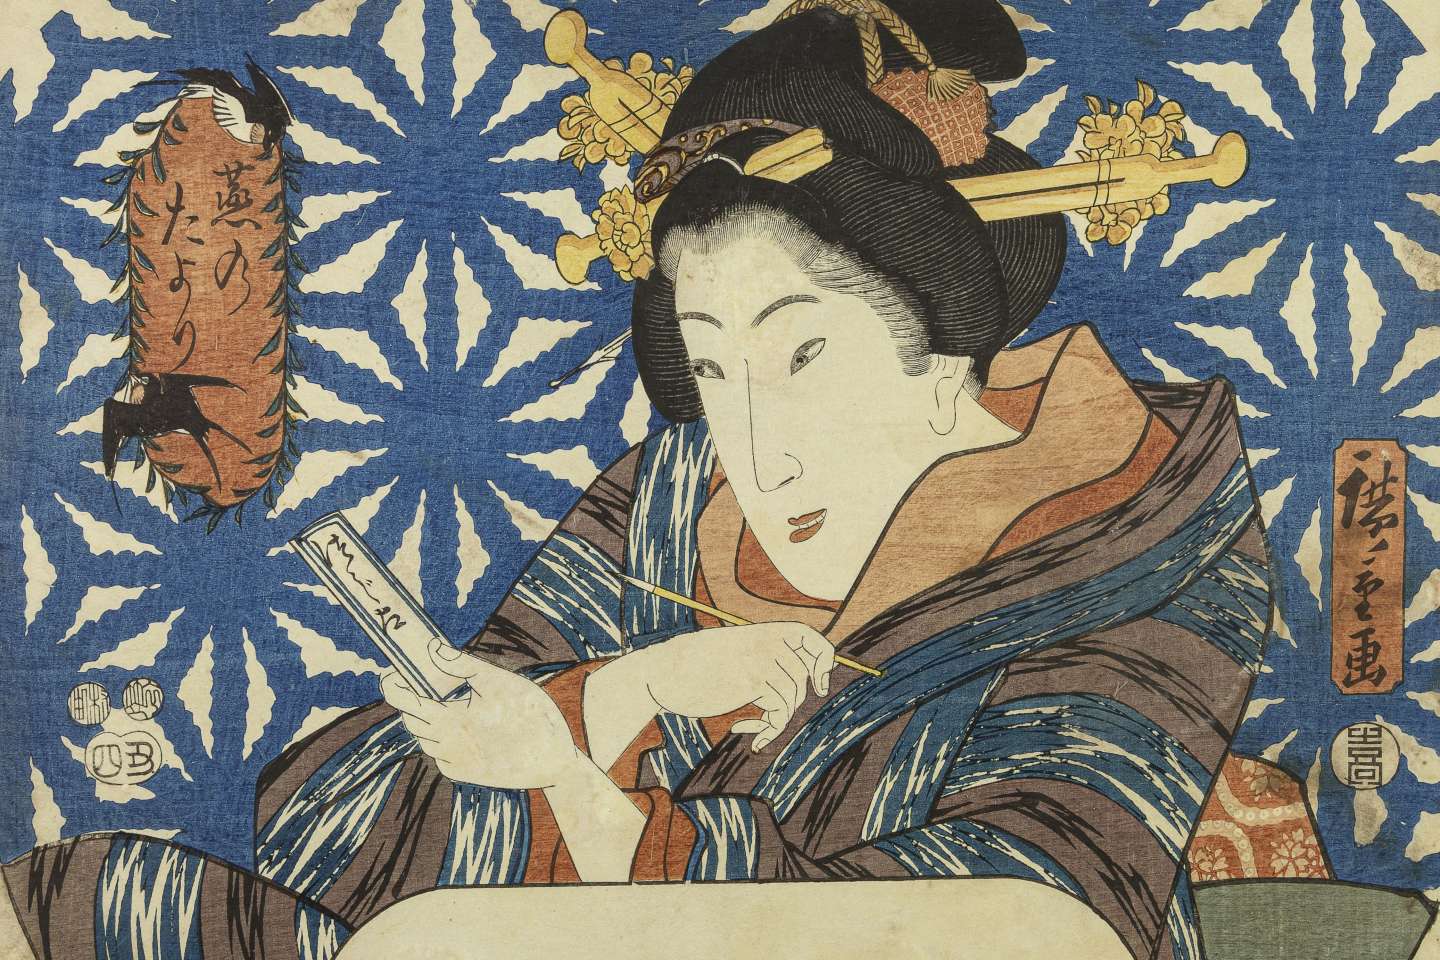 At the Guimet Museum, the ephemeral art of Utagawa Hiroshige’s fan